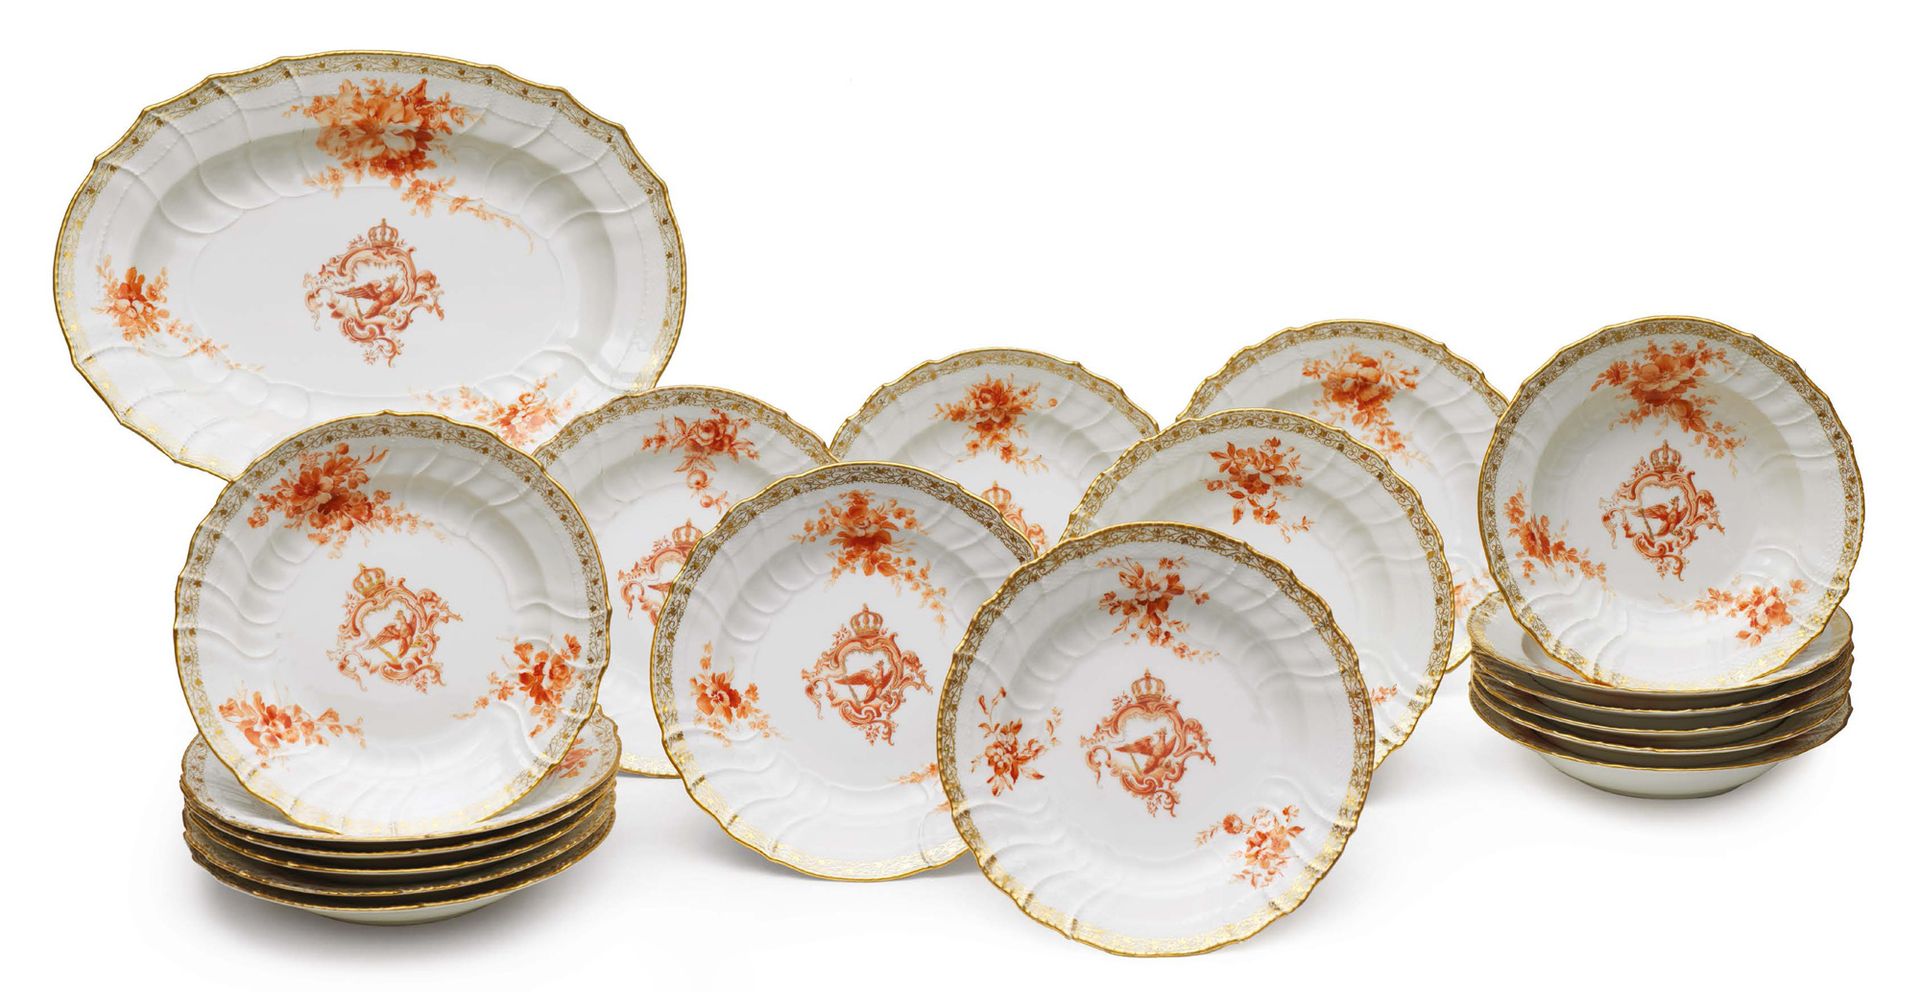 Null 罕见的德皇威廉二世服务的瓷器晚餐服务的一部分，包括12个餐盘，6个汤盘和一个椭圆形的盘子，有 "Neuozier "形状的轮廓边缘，用铁红色和金色装饰&hellip;